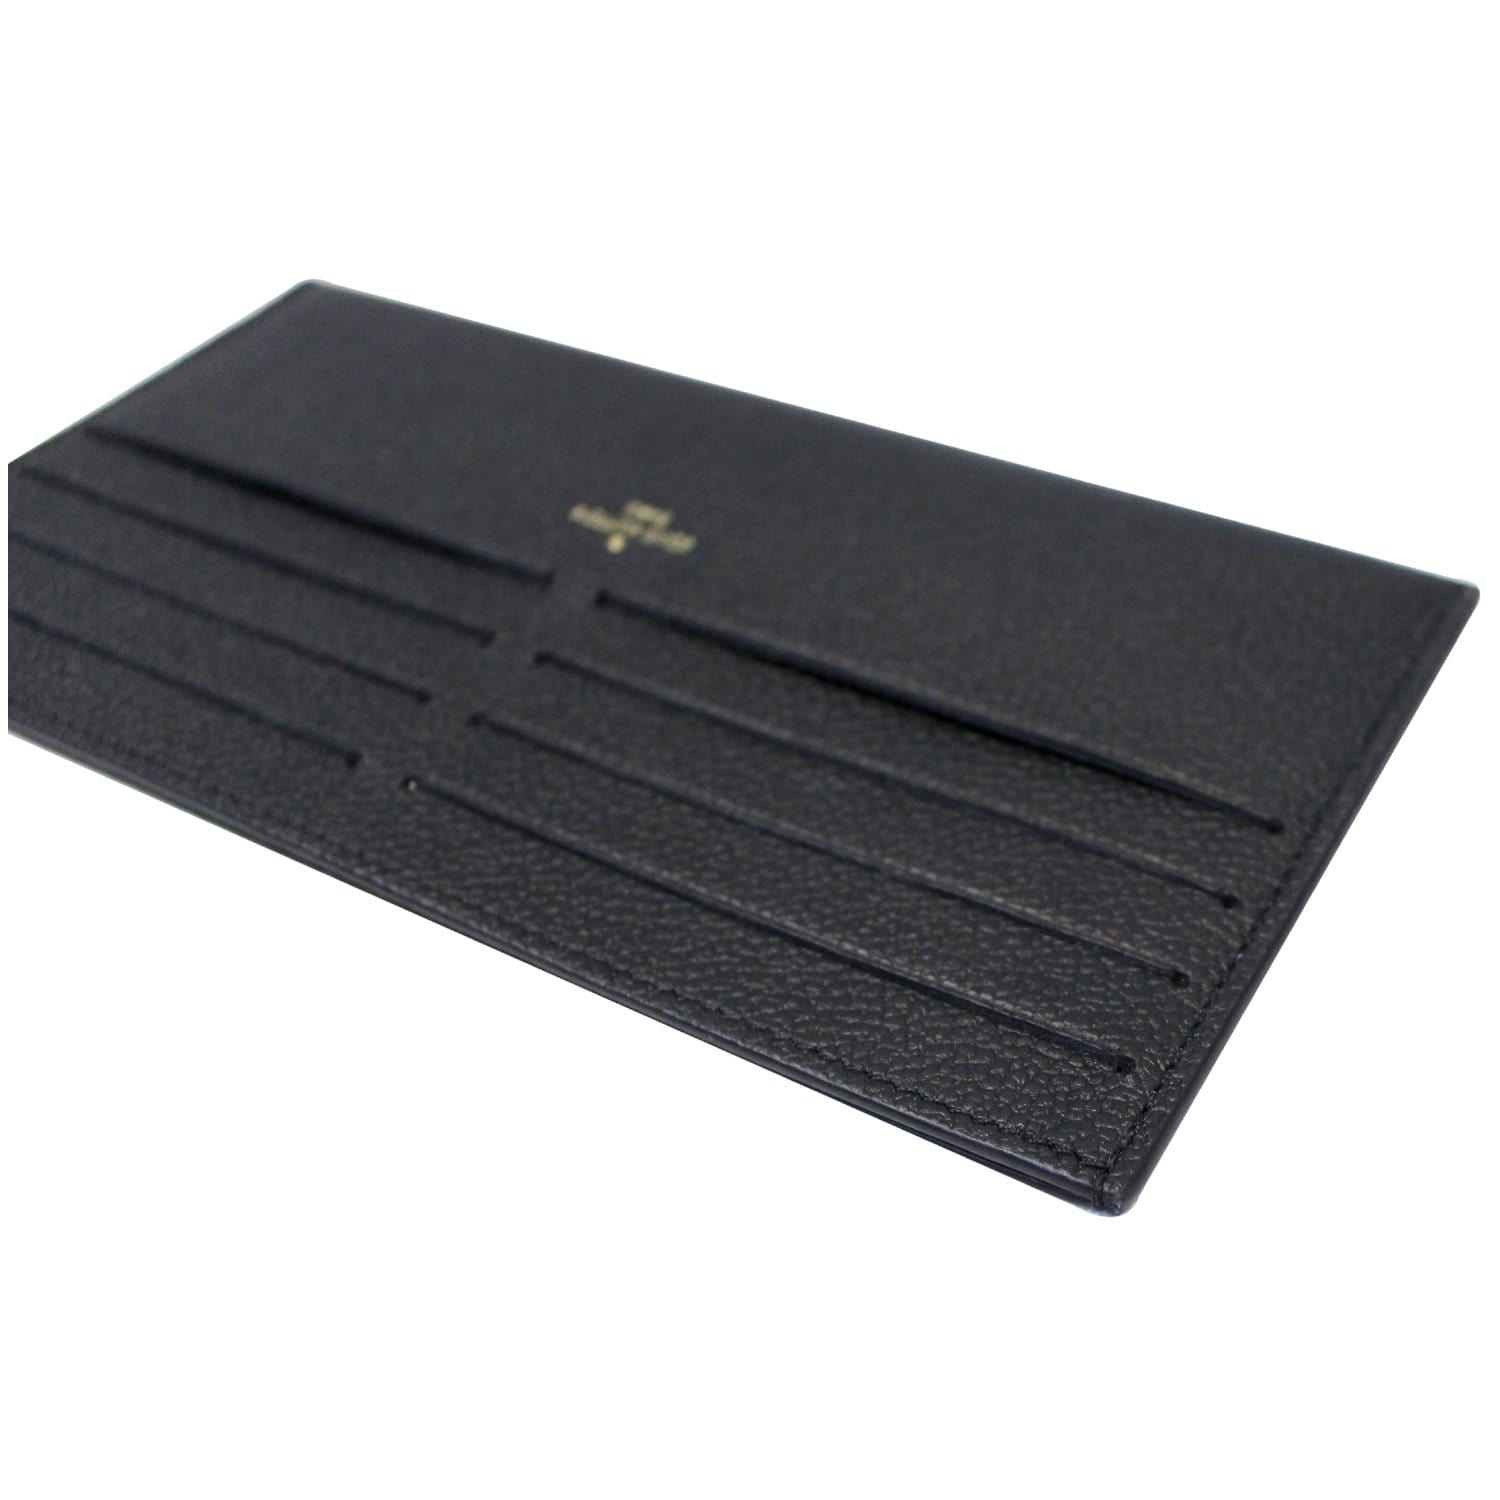 Louis Vuitton Wallet Credit Card Insert Black Empriente Leather From Felicie  C91